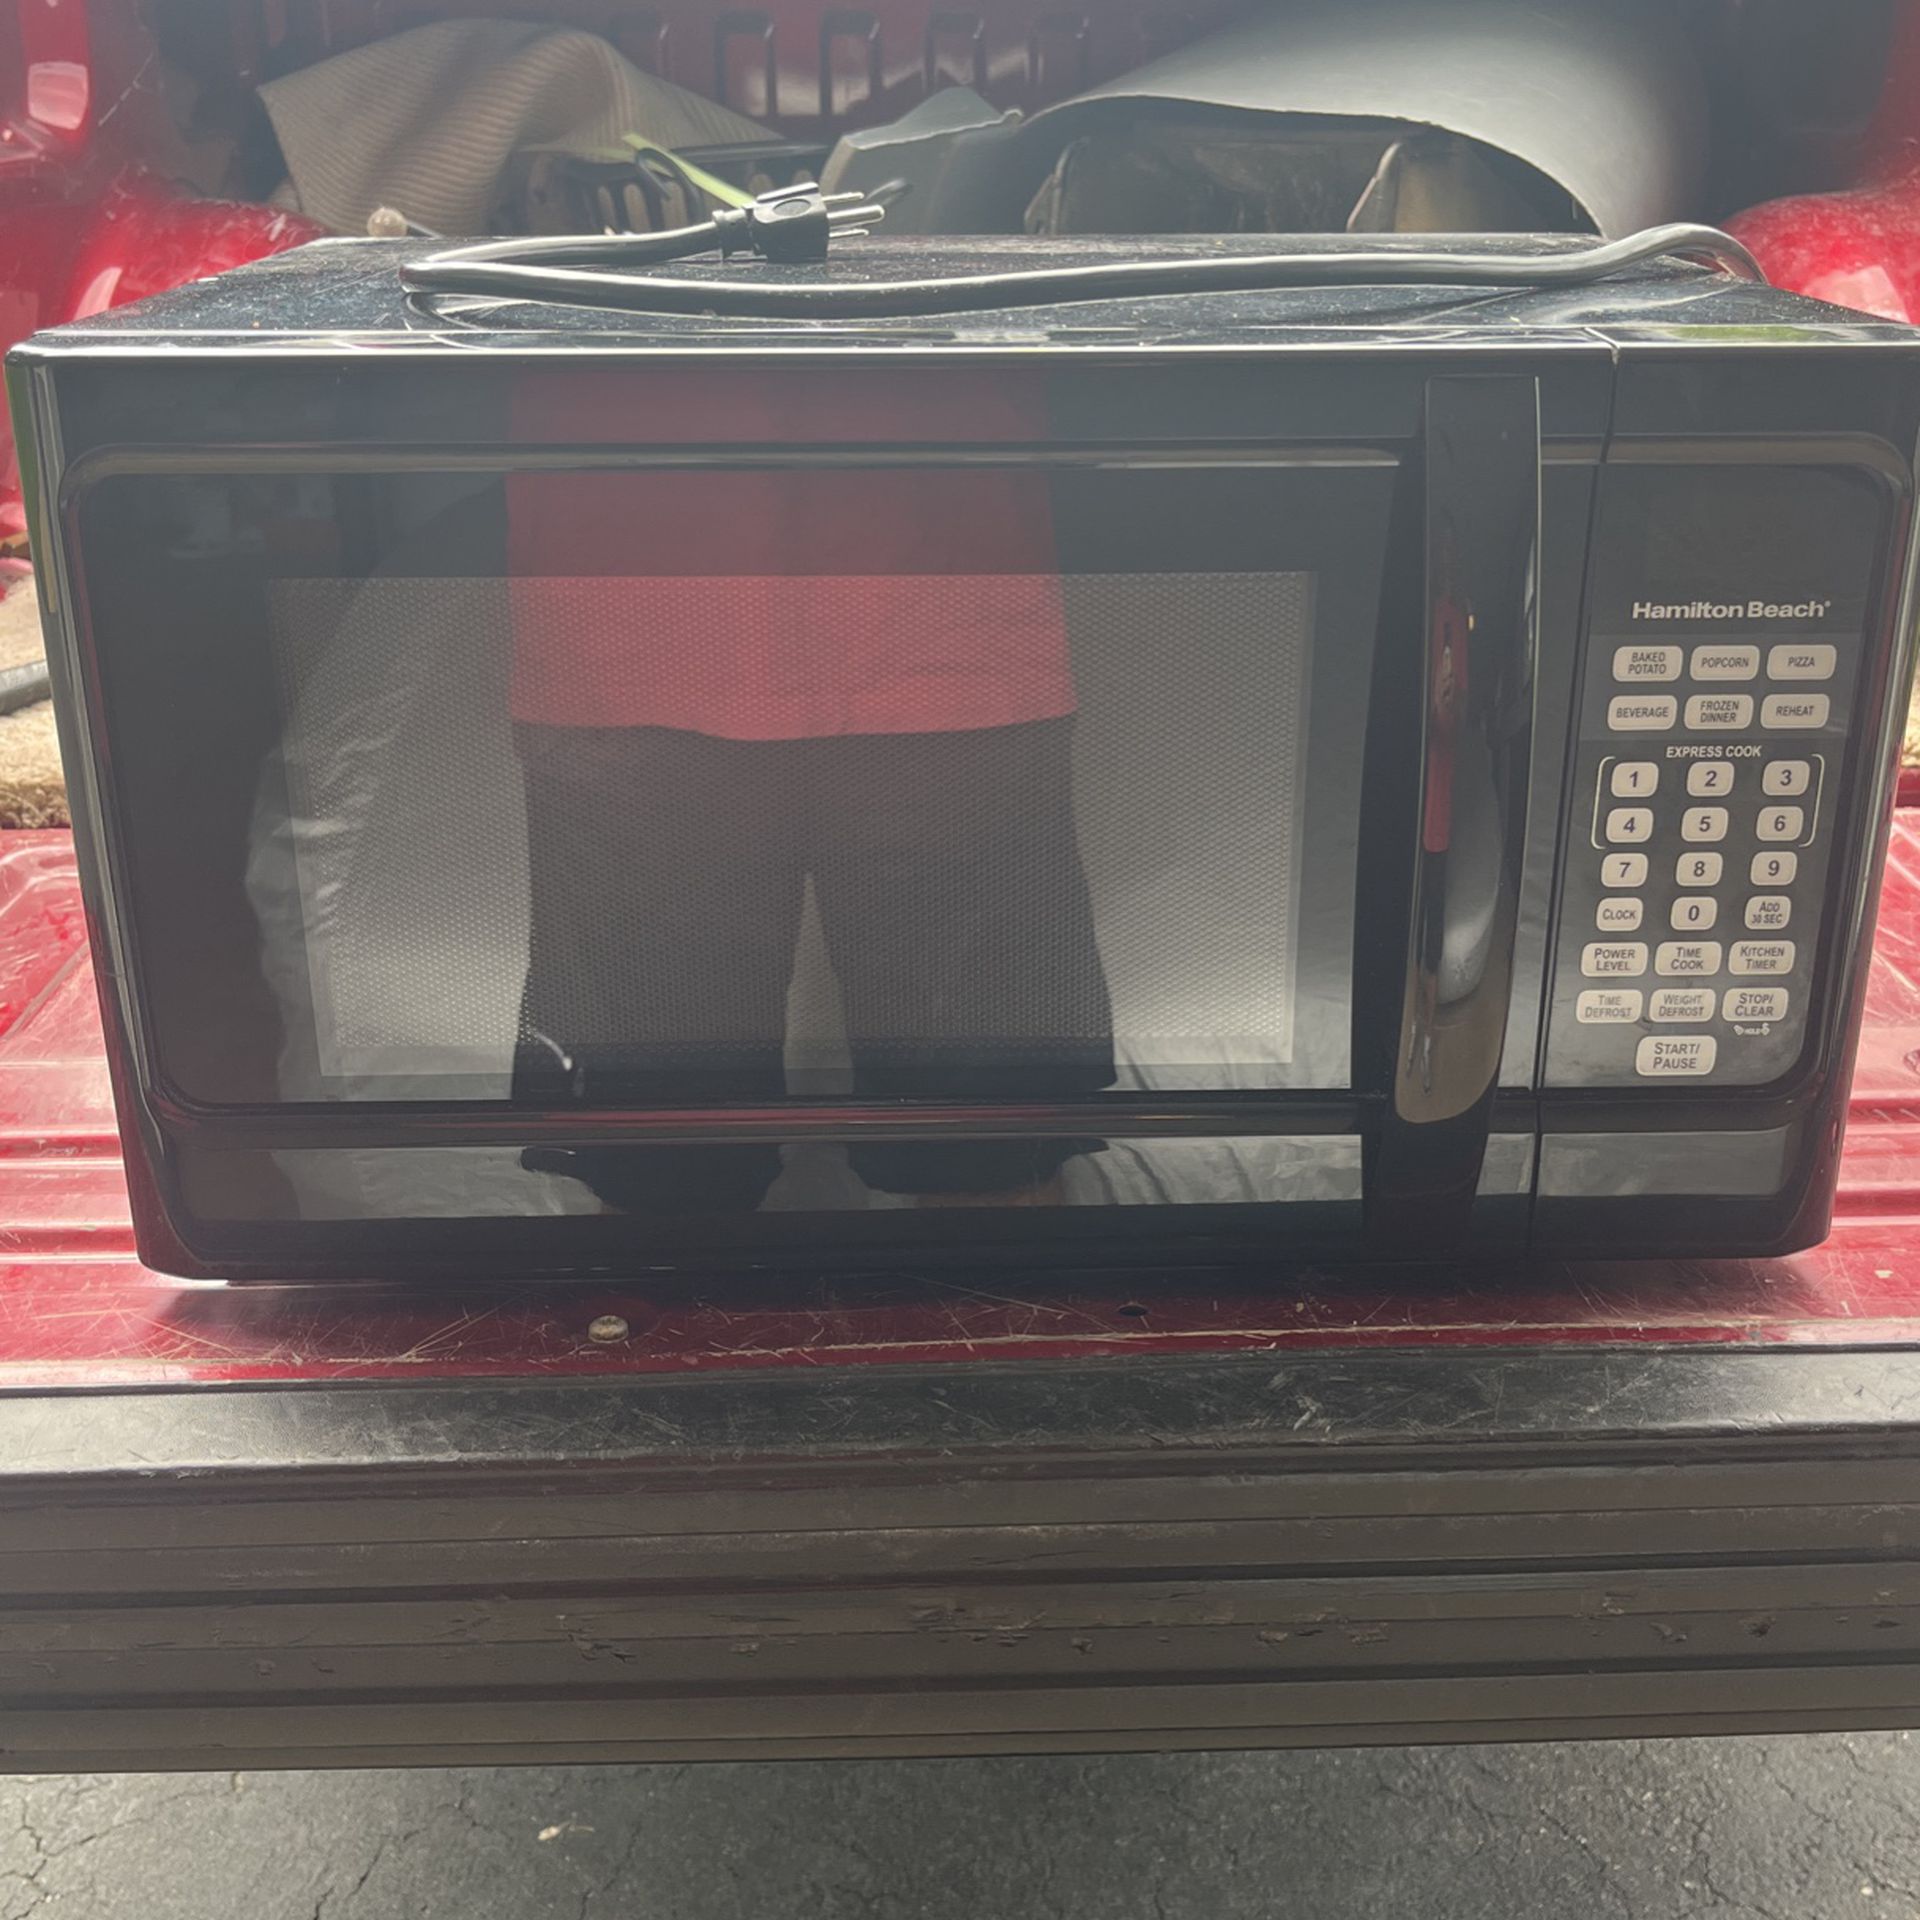 Hamilton Beach Microwave for Sale in North Attleborough, MA - OfferUp